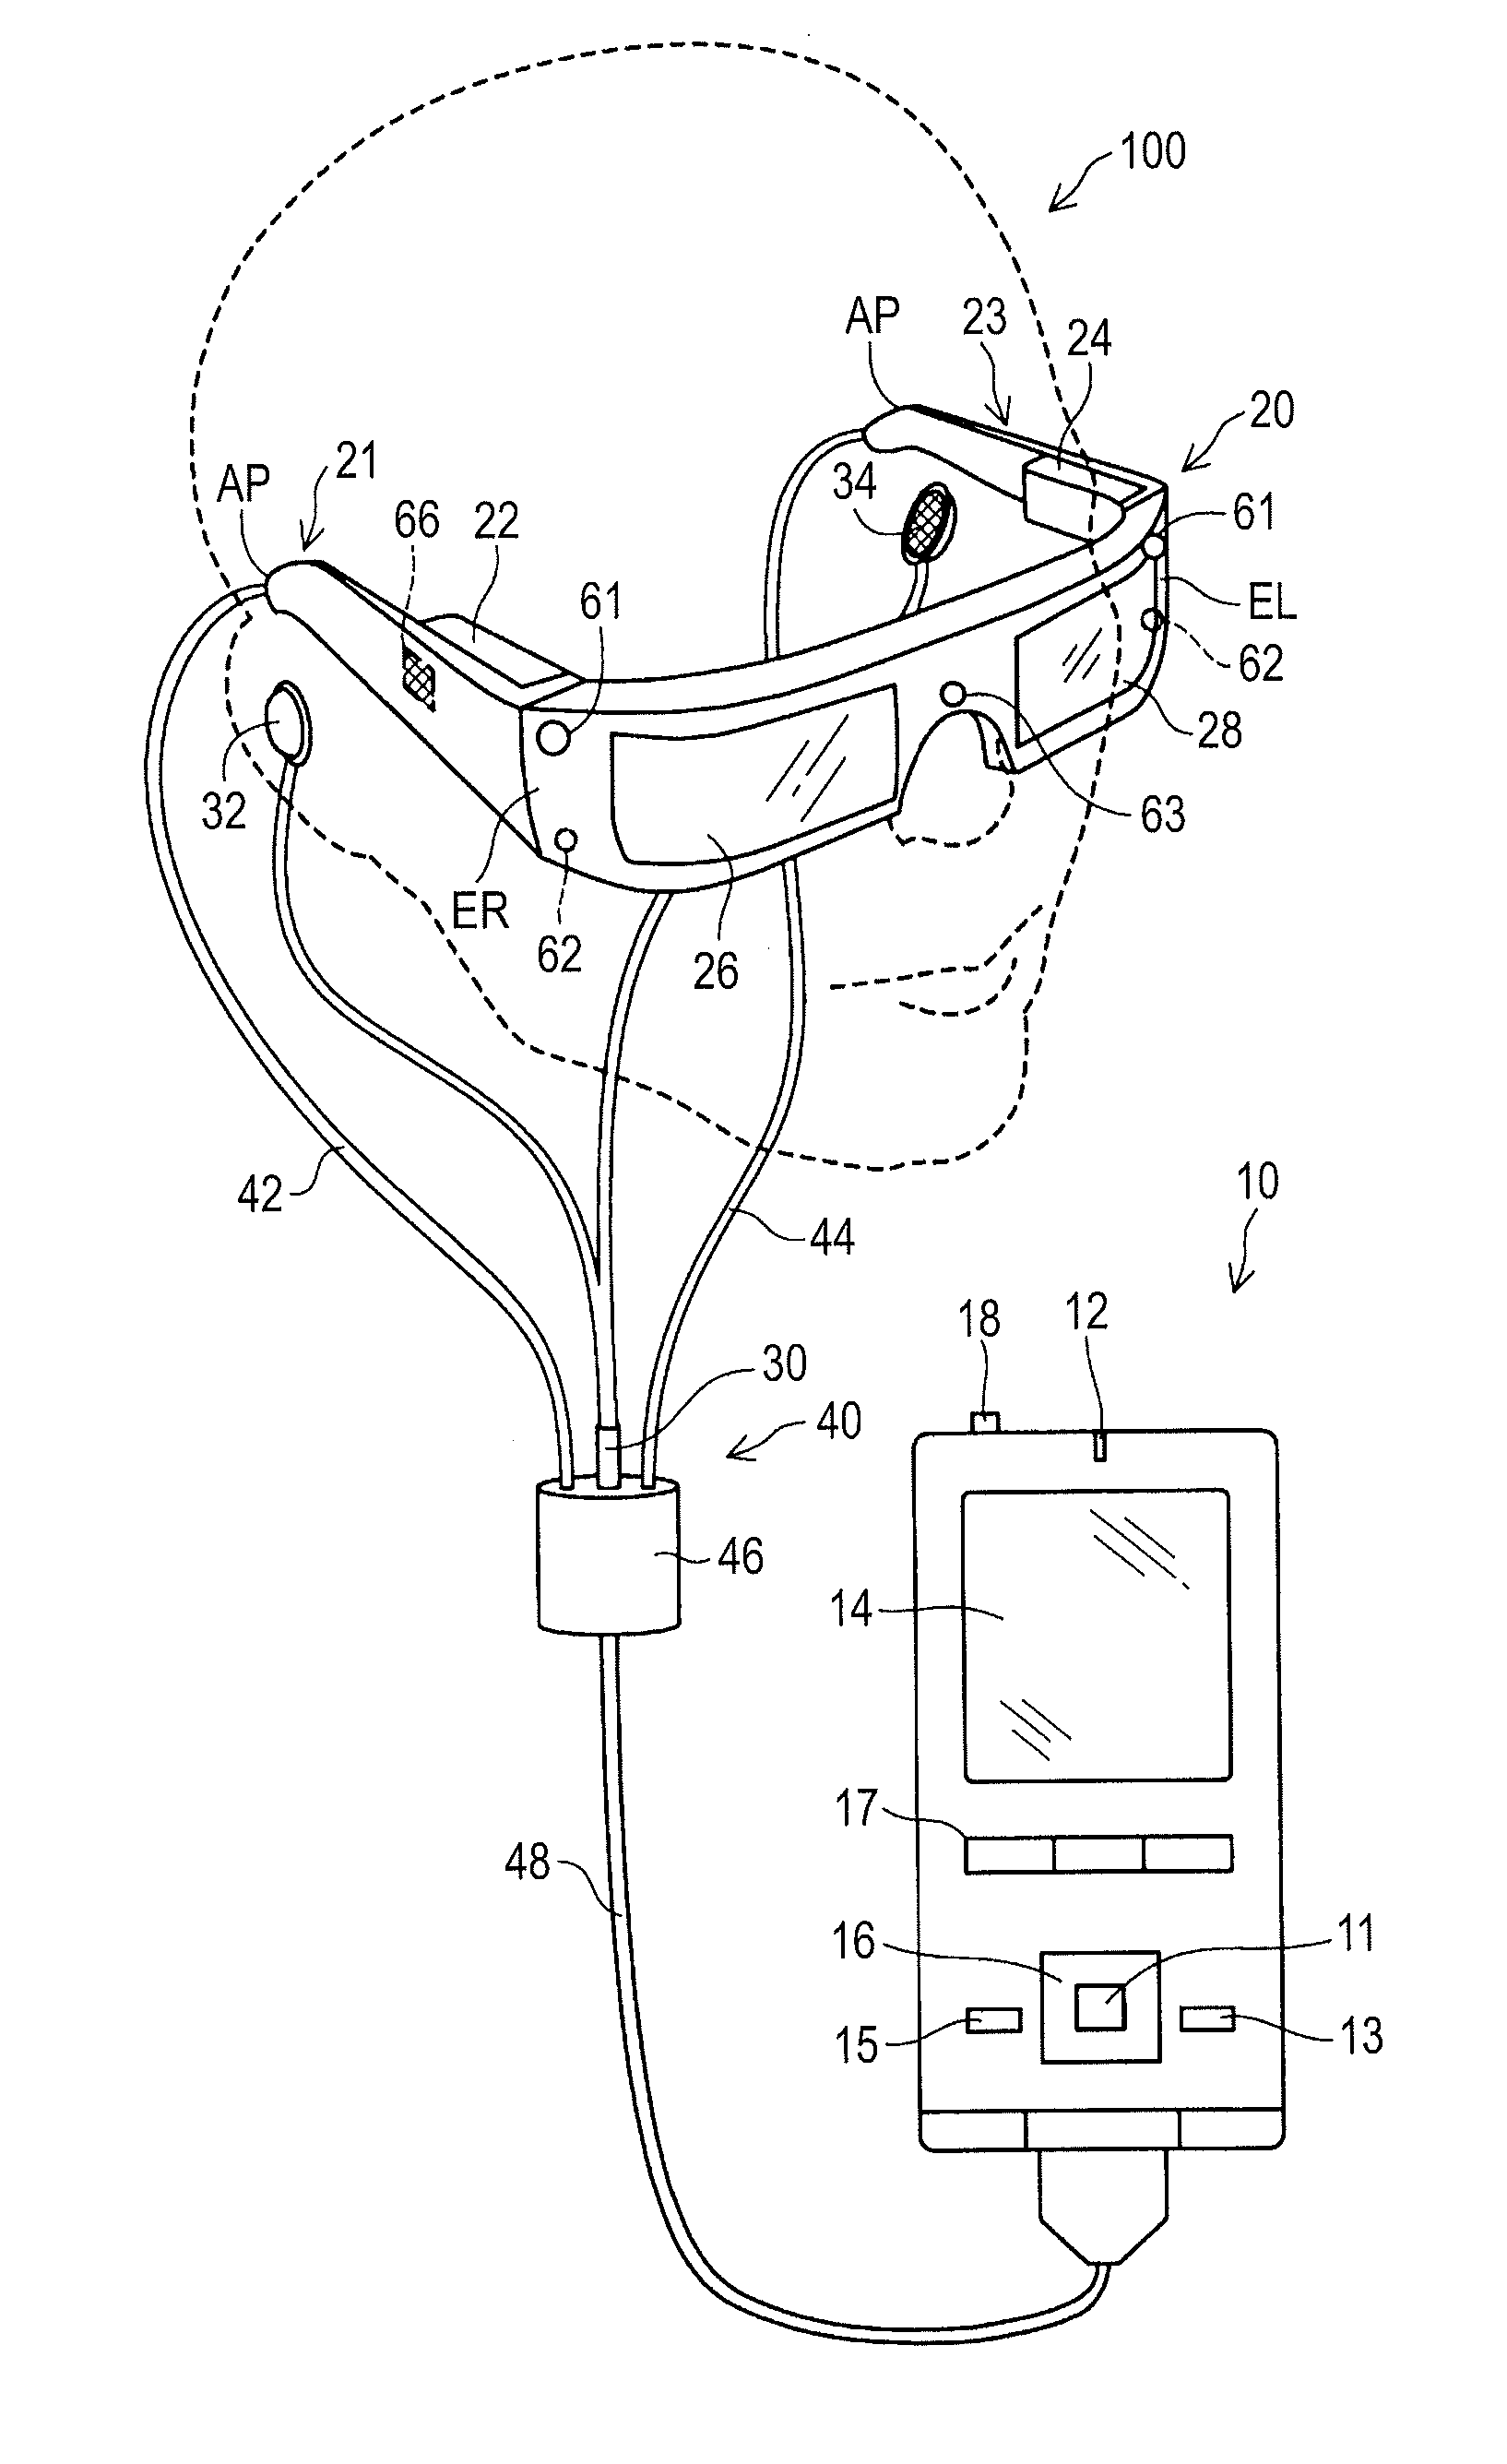 Head-mounted display device, method of controlling head-mounted display device, and computer program